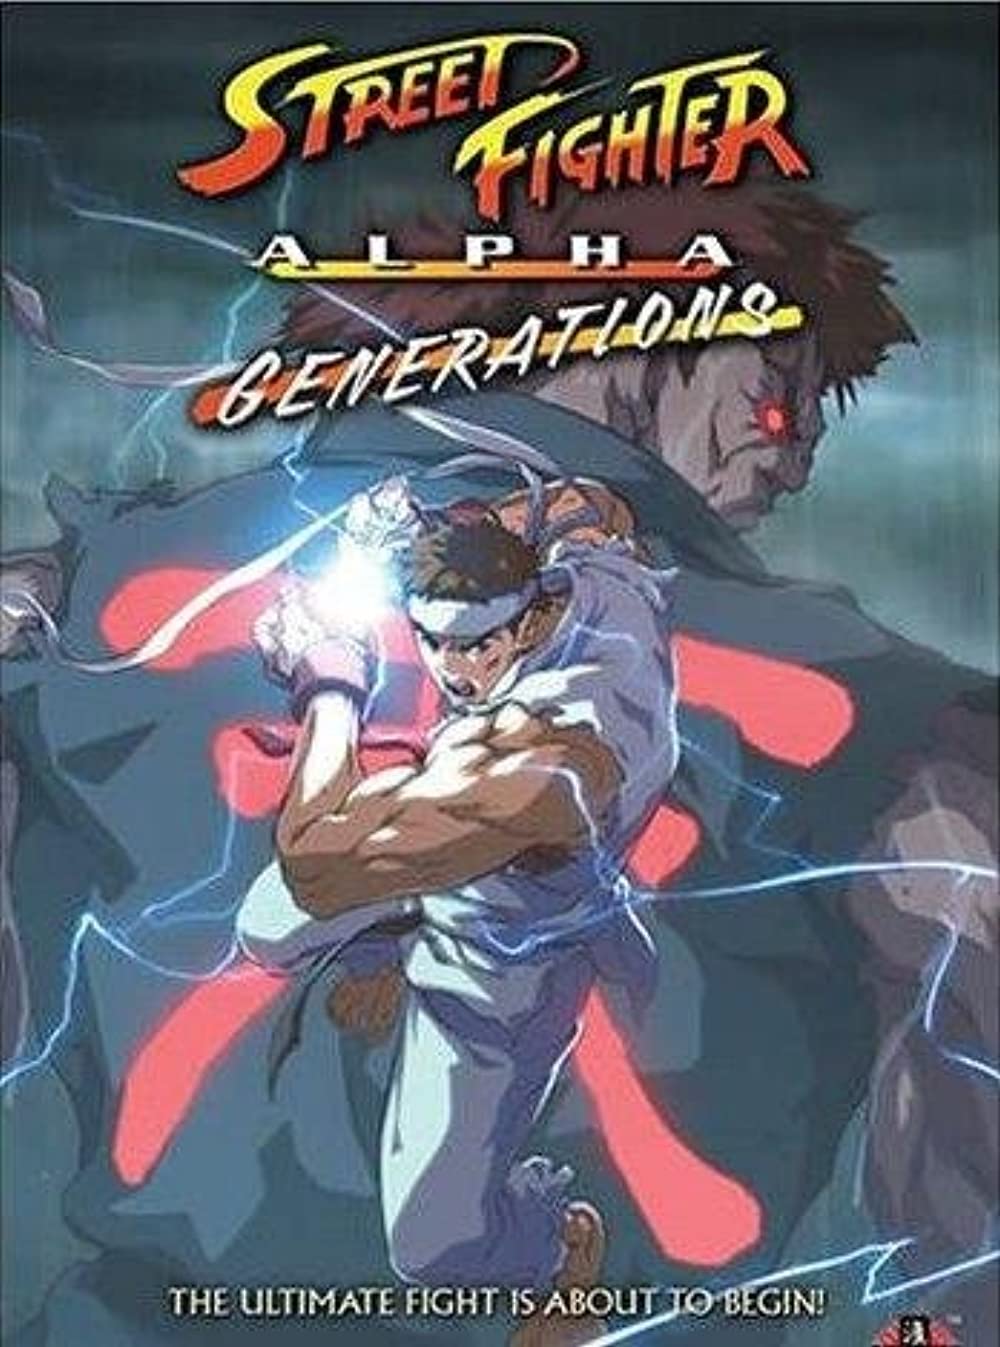 Download Street Fighter Alpha: Generations Movie | Street Fighter Alpha: Generations Dvd